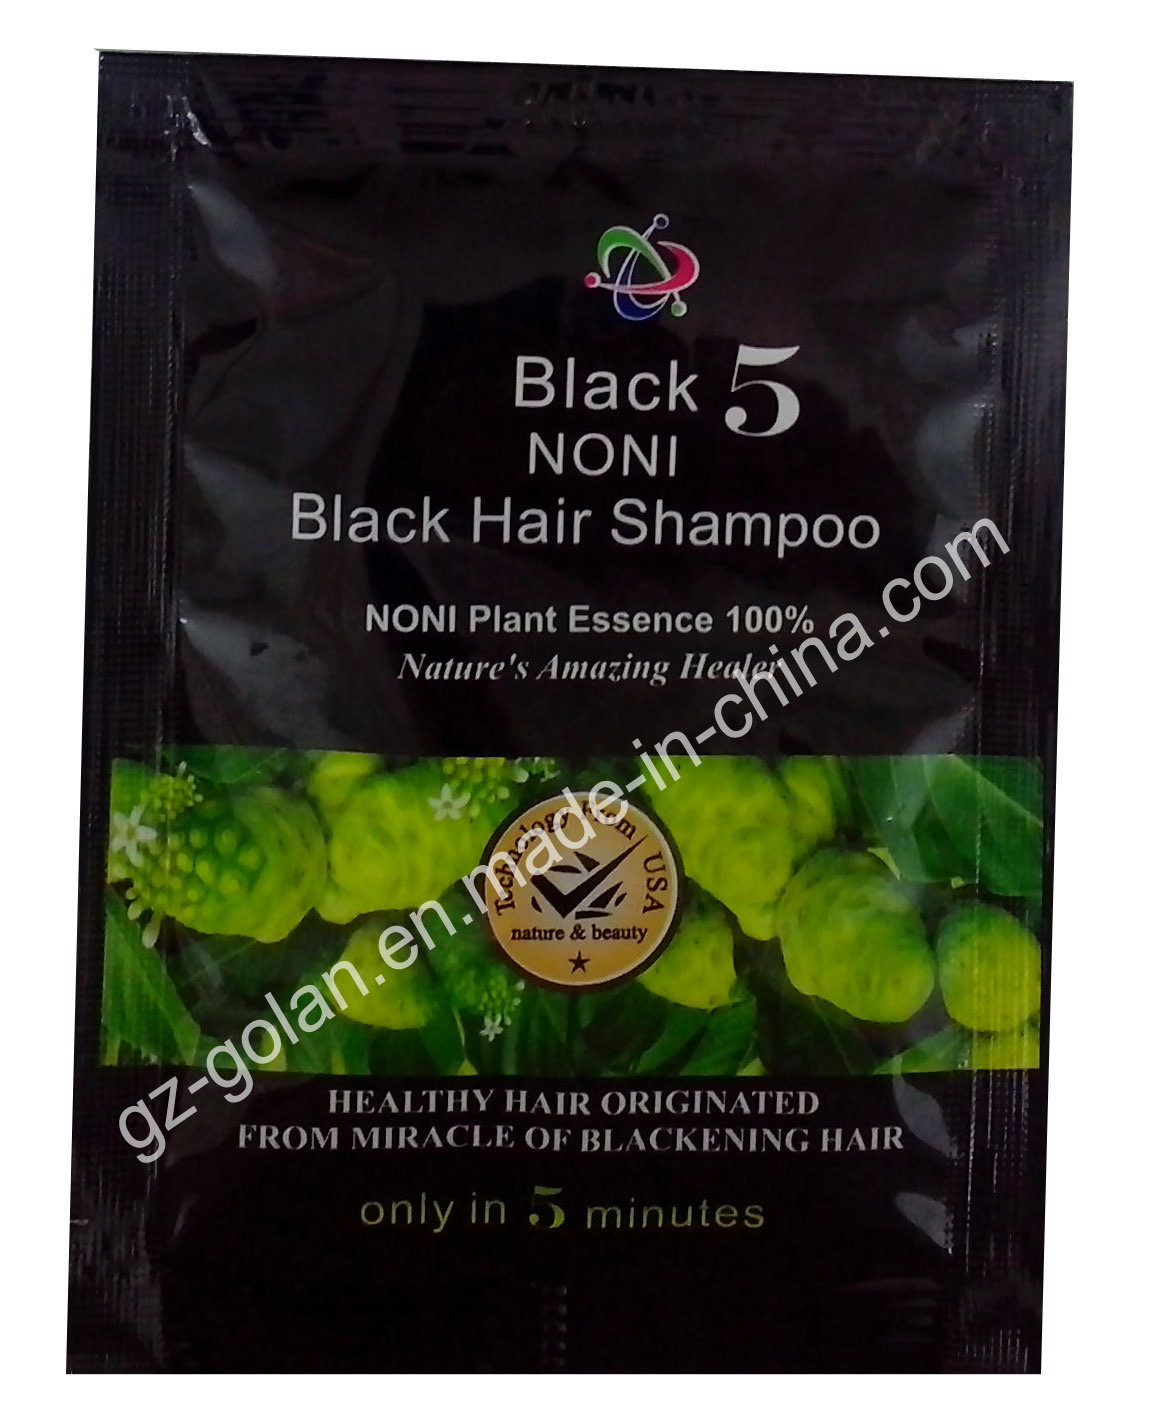 Black 5 Noni Black Hair Shampoo